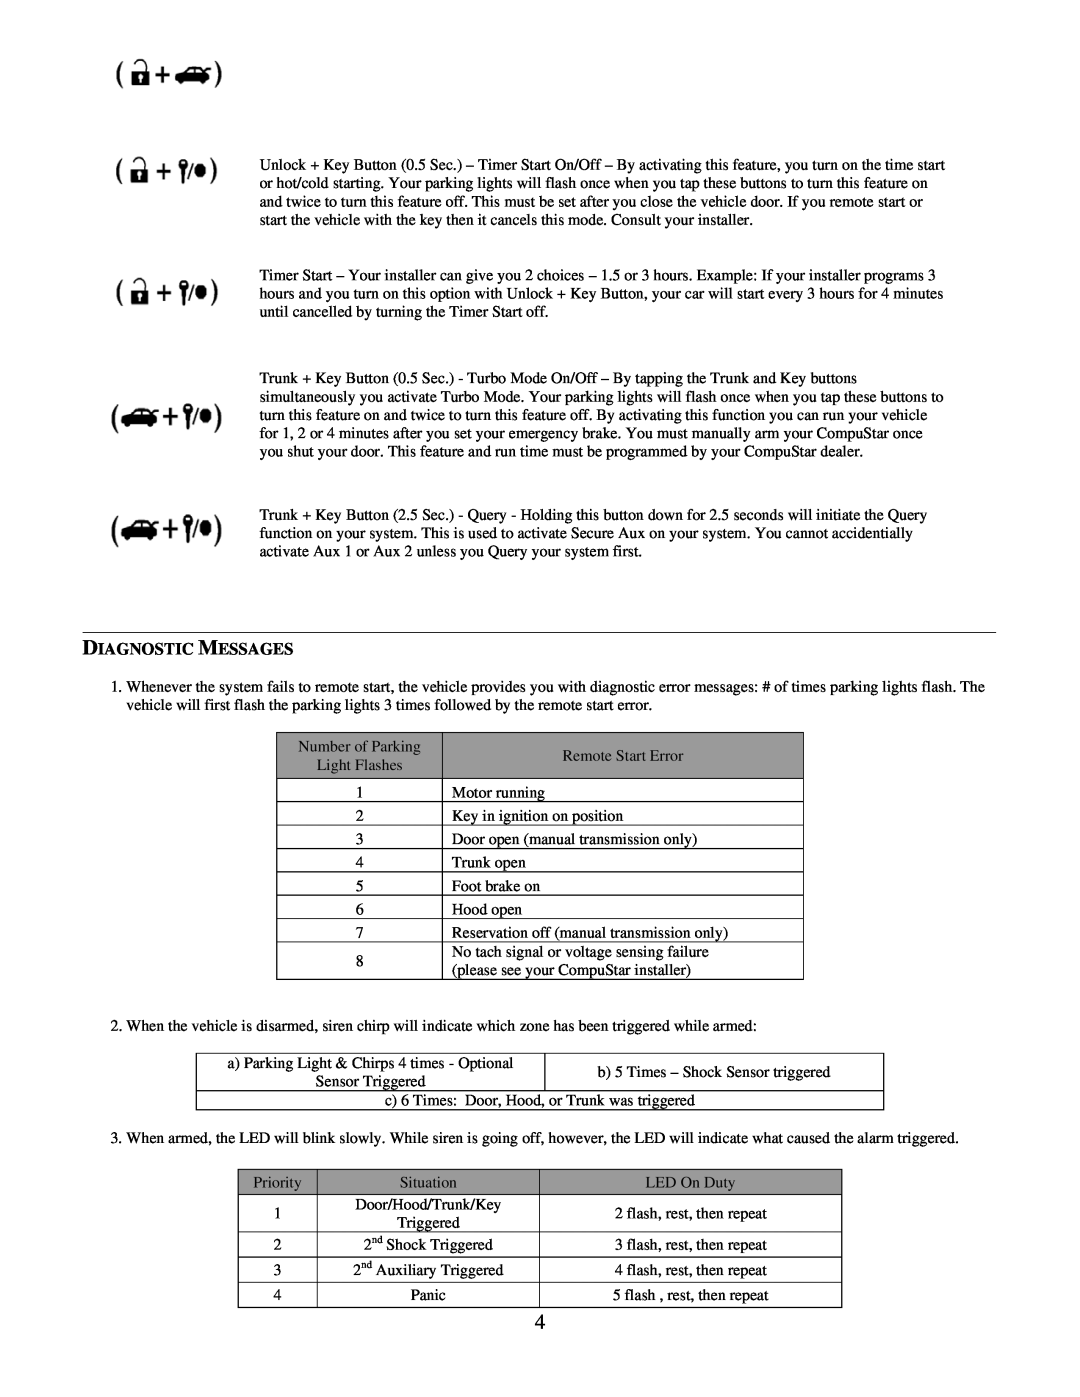 CompuSTAR 1W900FMR manual Diagnostic Messages 